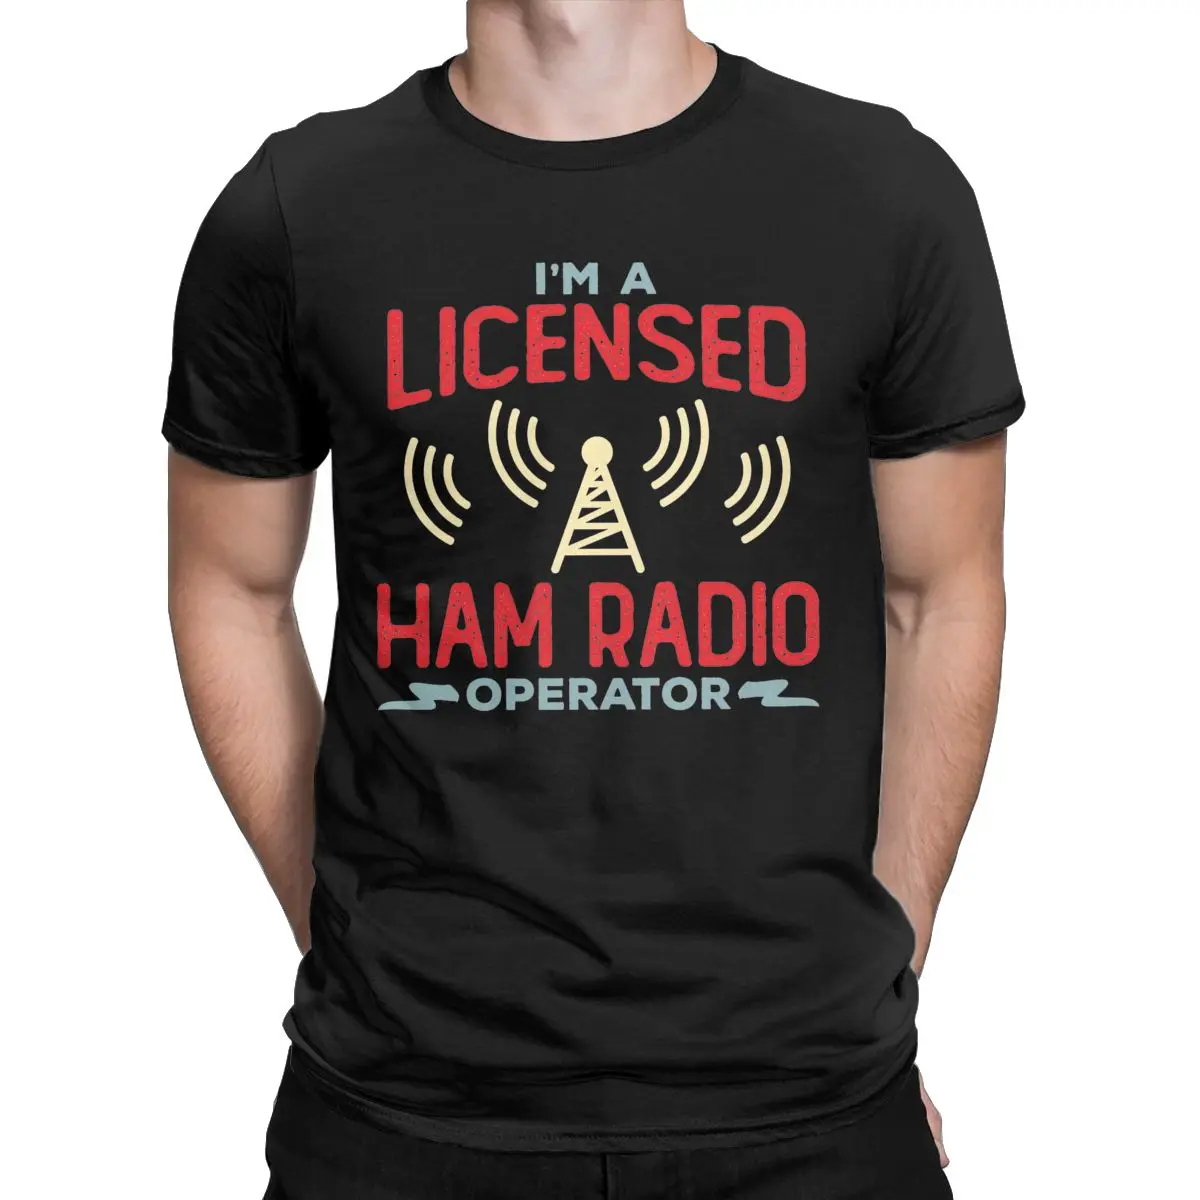 

I'm A Licensed Ham Radio Operator Men's T Shirts Vintage Tee Shirt Short Sleeve O Neck T-Shirts 100% Cotton Birthday Present